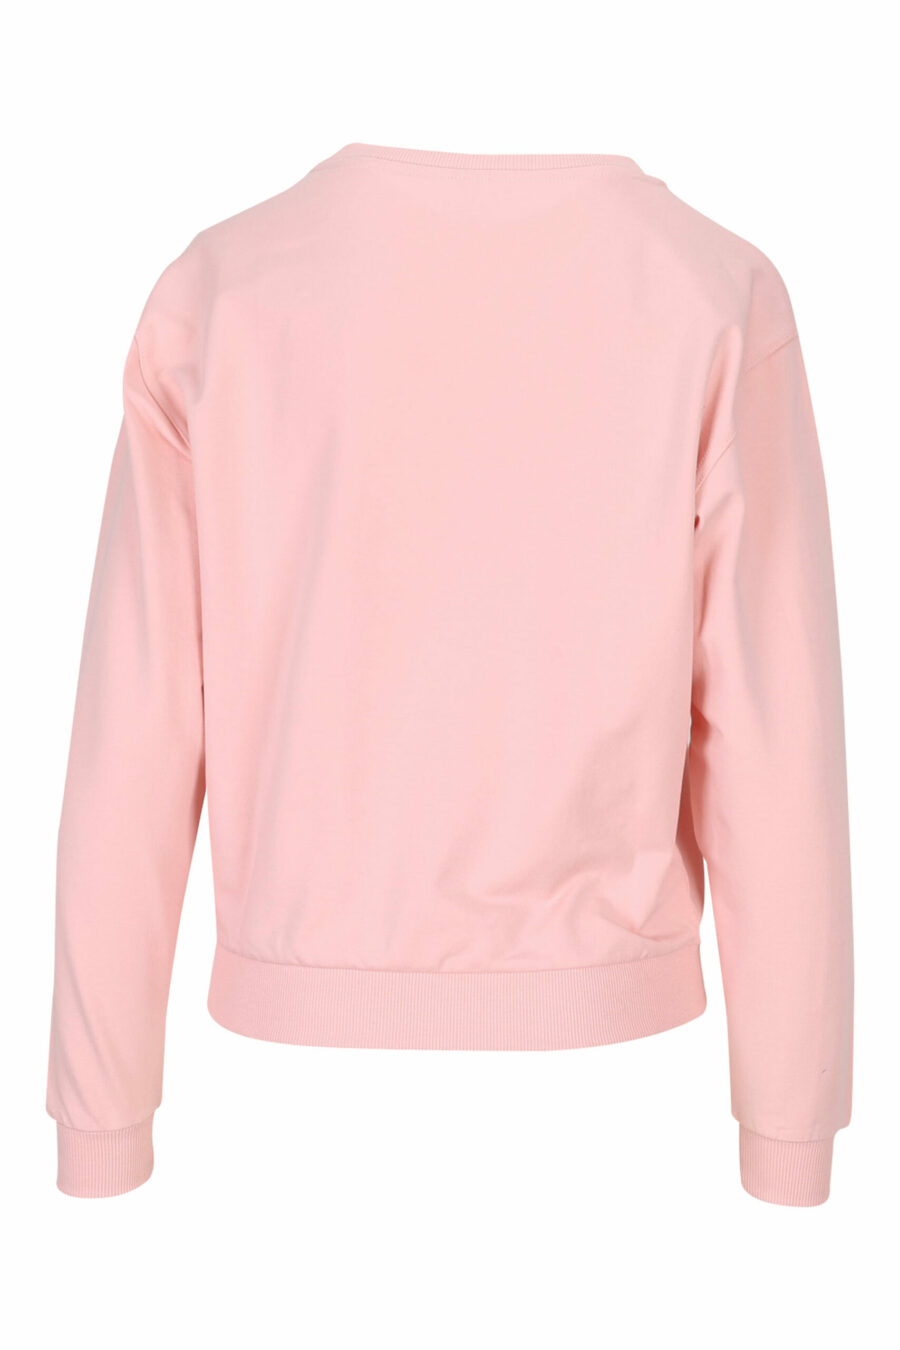 Pink sweatshirt with bear logo patch "underbear" - 889316618365 1 scaled